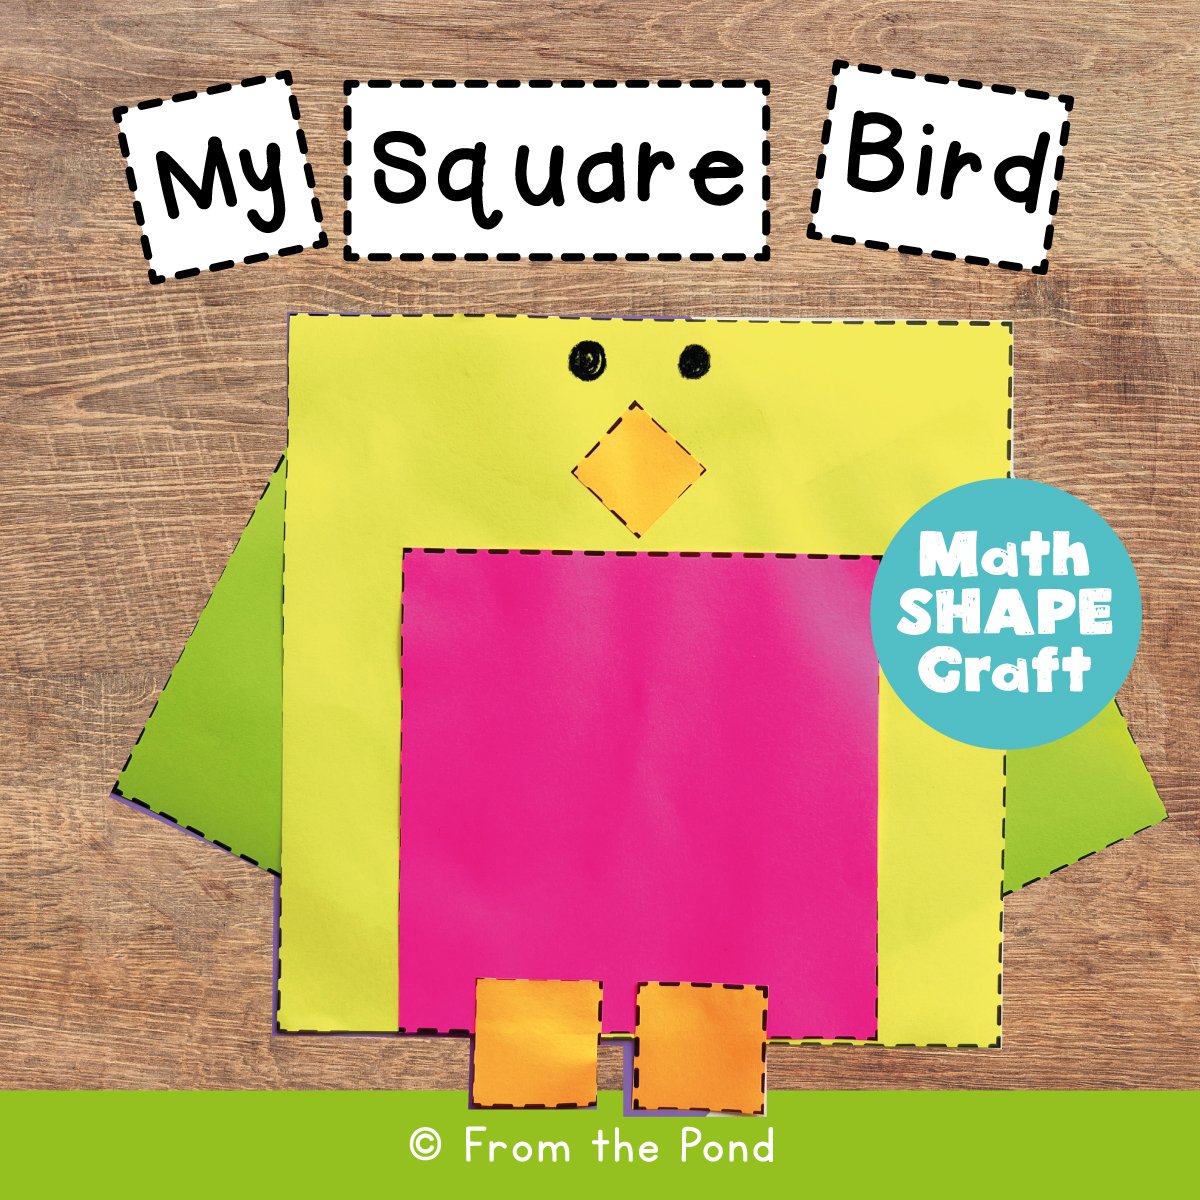 square-bird.jpg